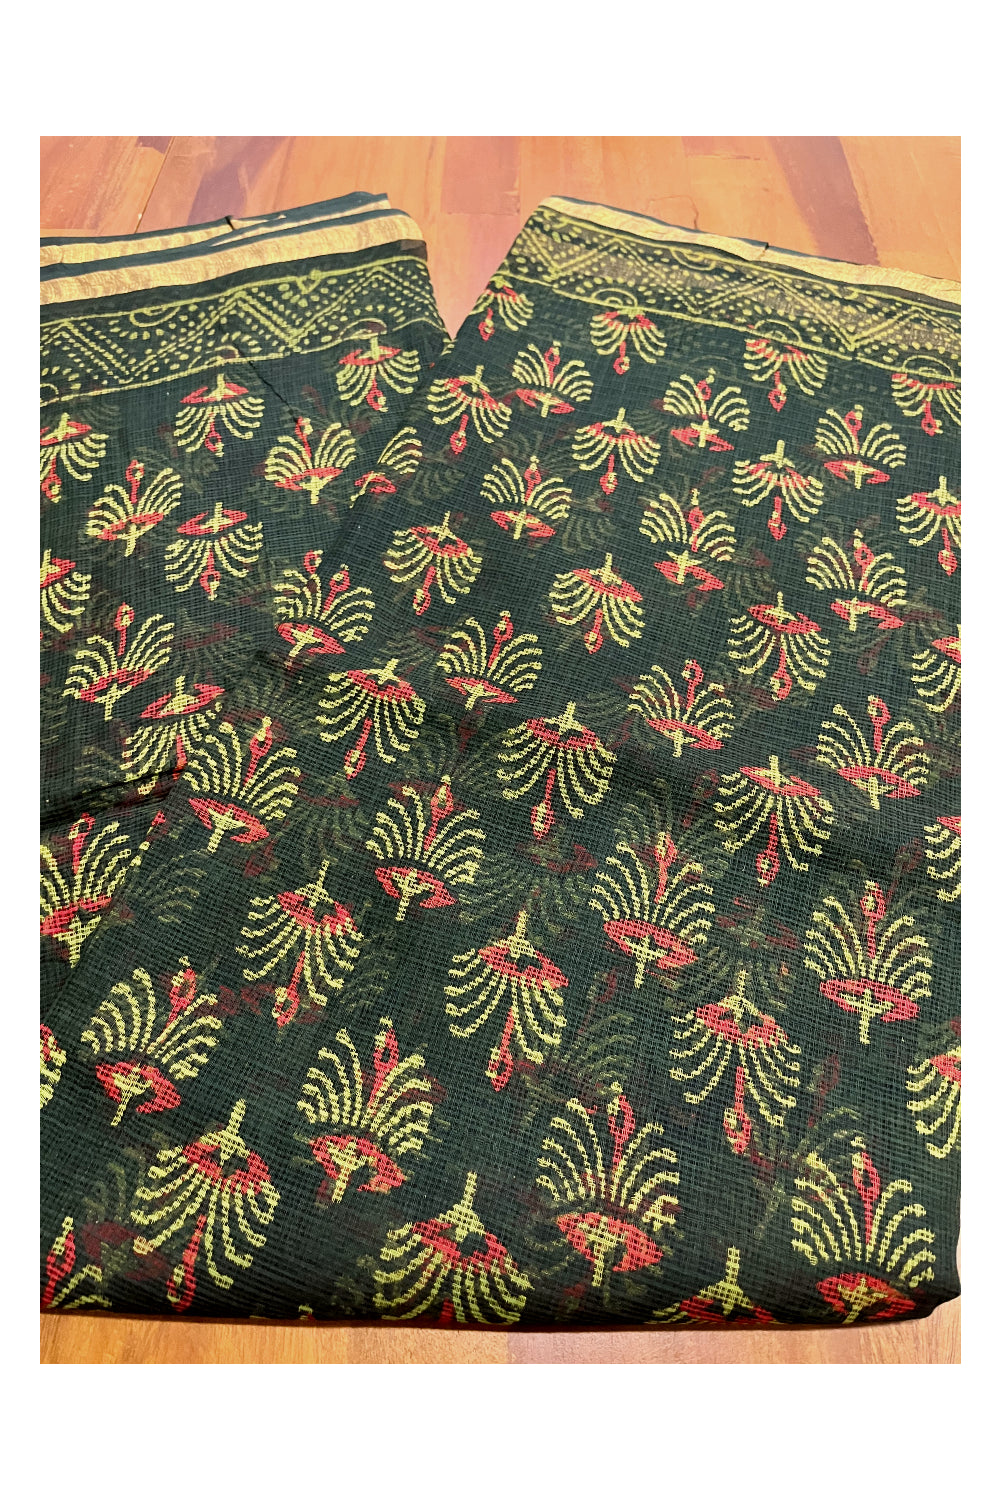 Southloom Kota Fabric Floral Printed Dark Green Saree